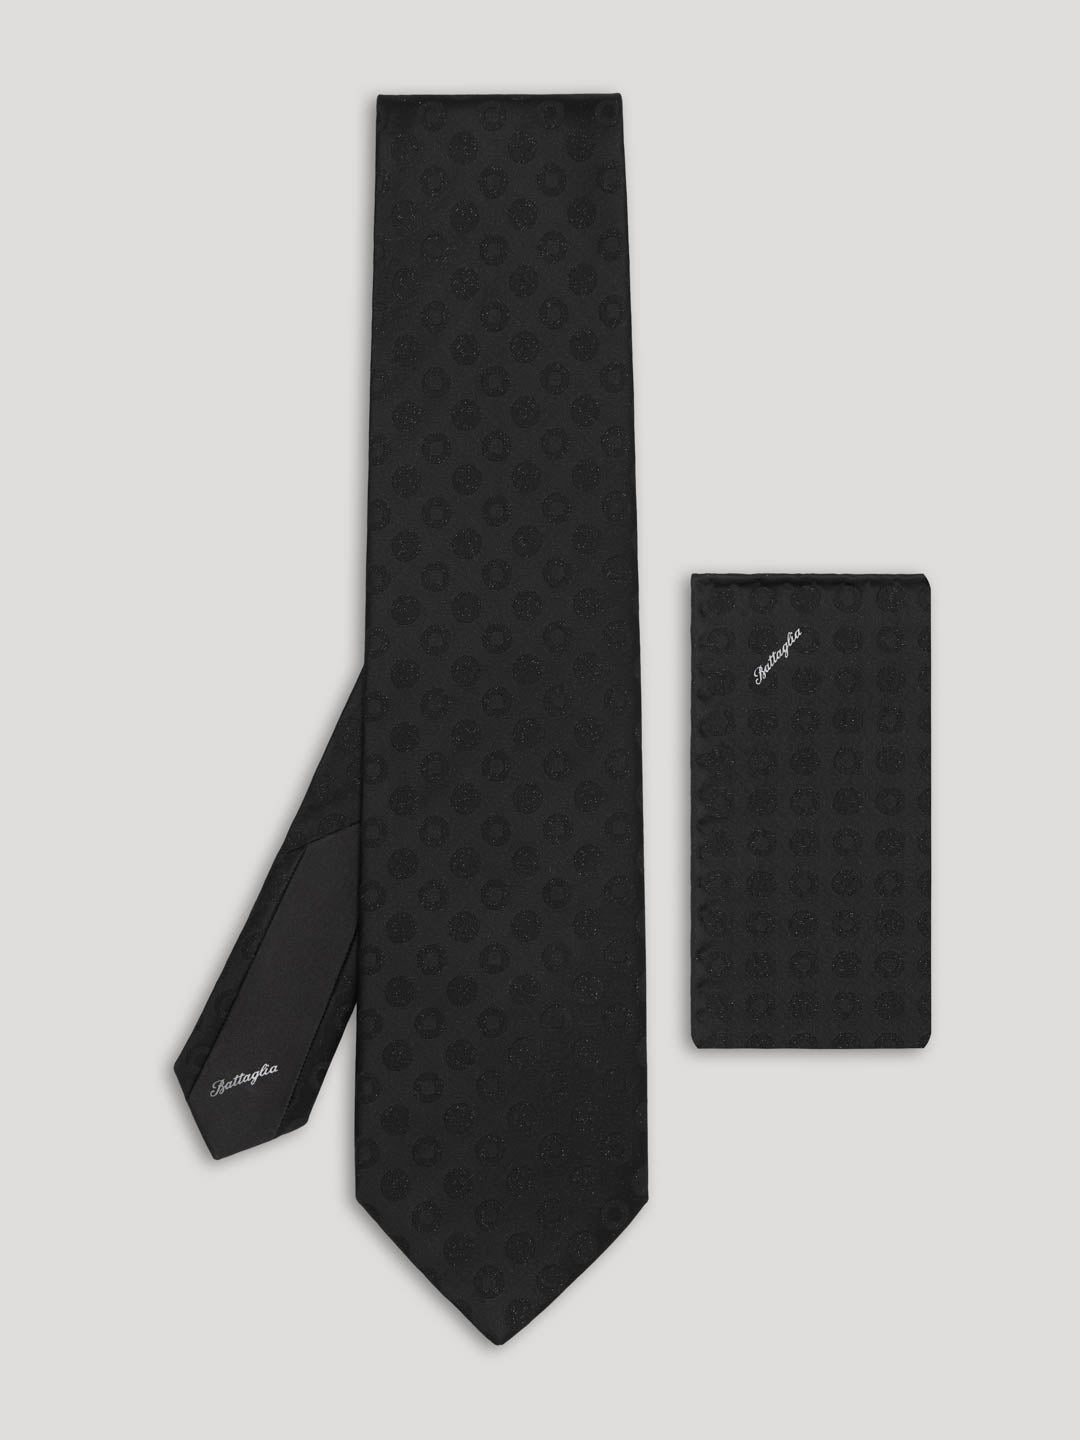 Black tone on tone polkadot silk tie with handkerchief. 